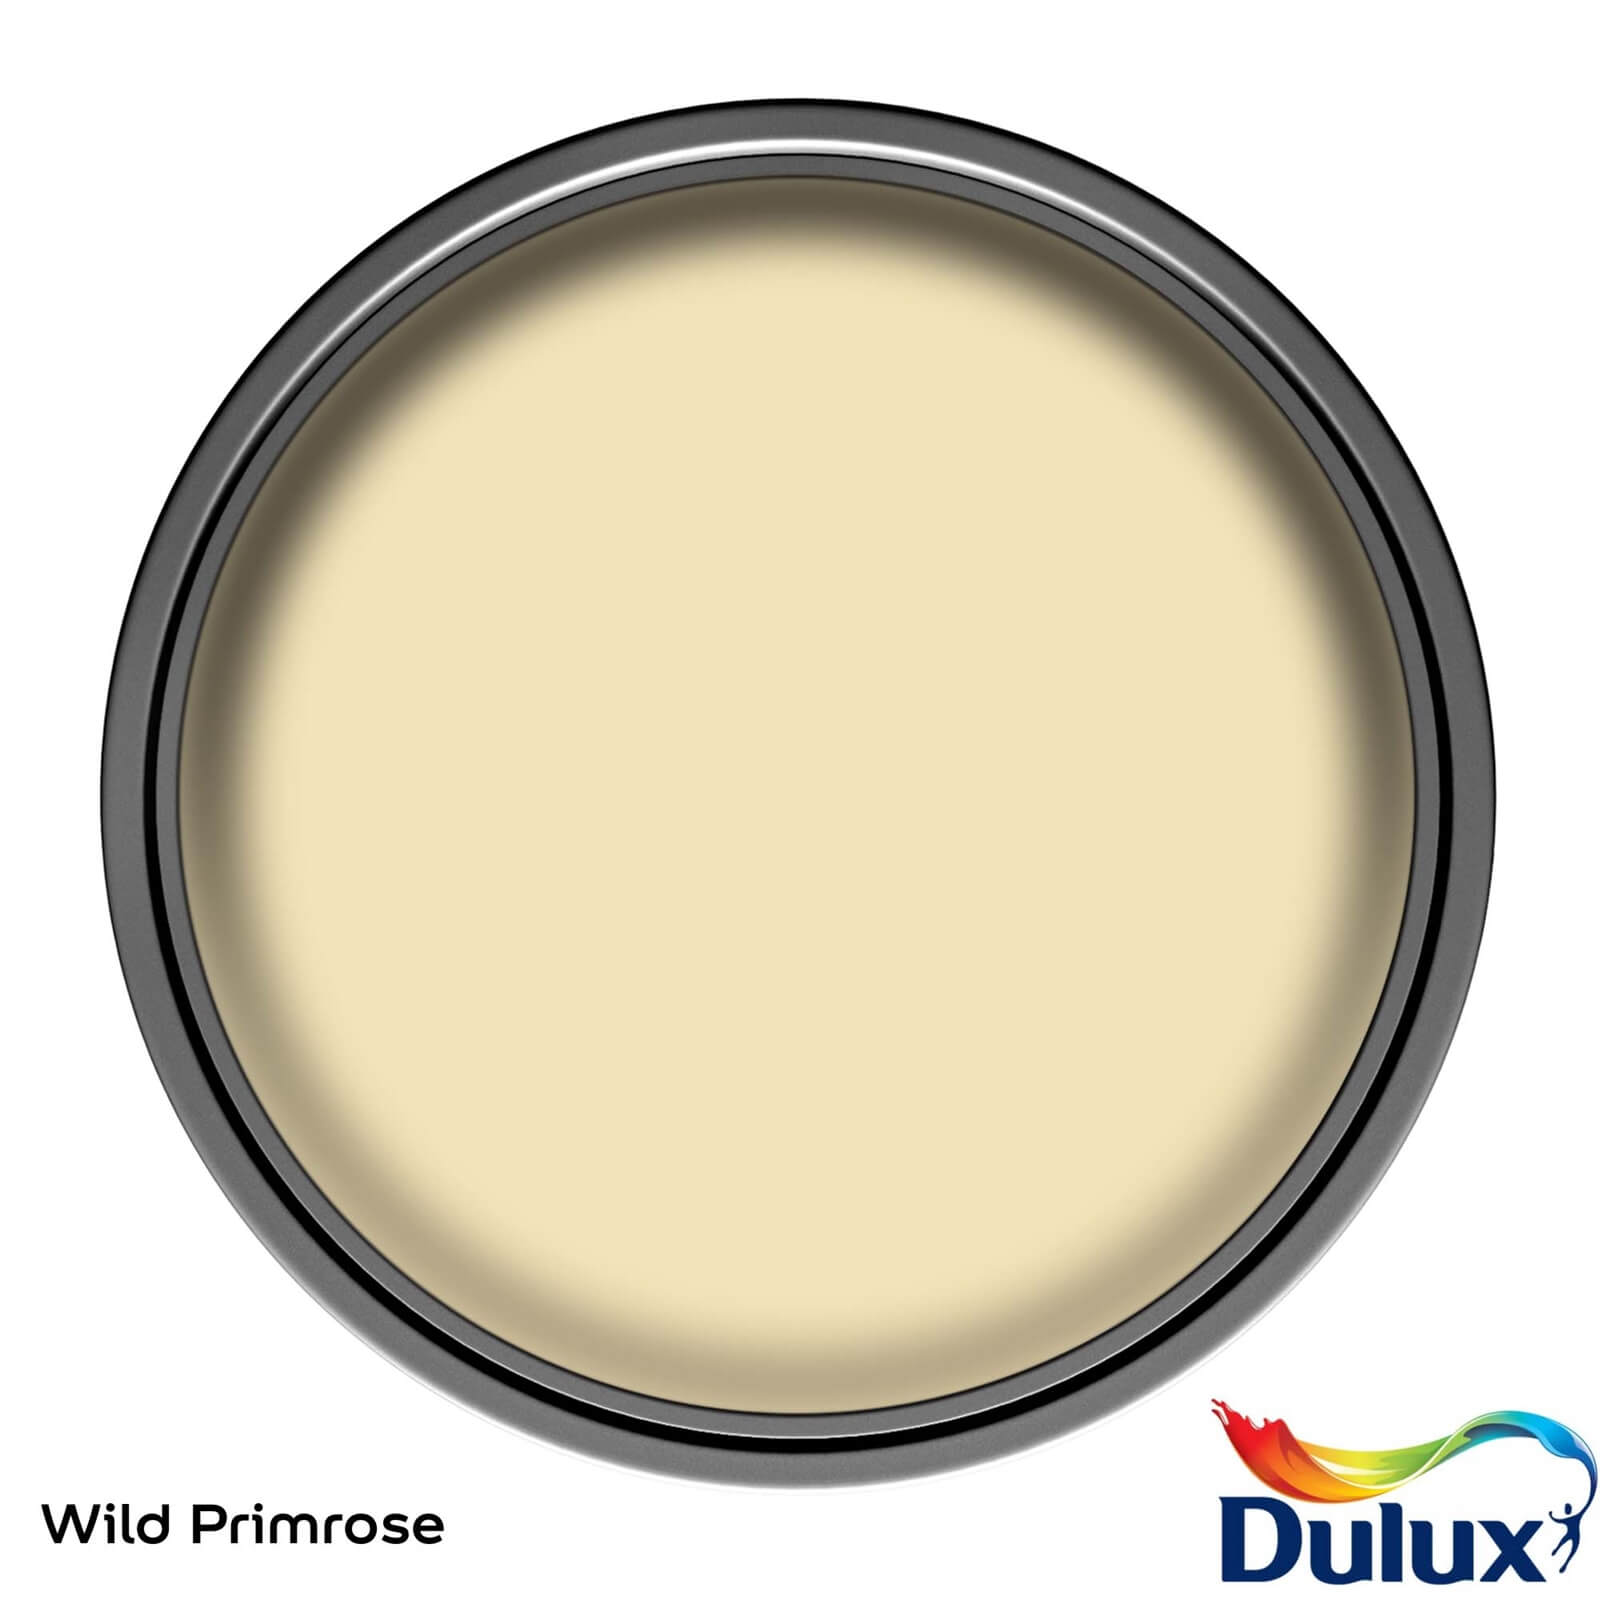 Dulux Easycare Kitchen Wild Primrose Matt Paint - 2.5L